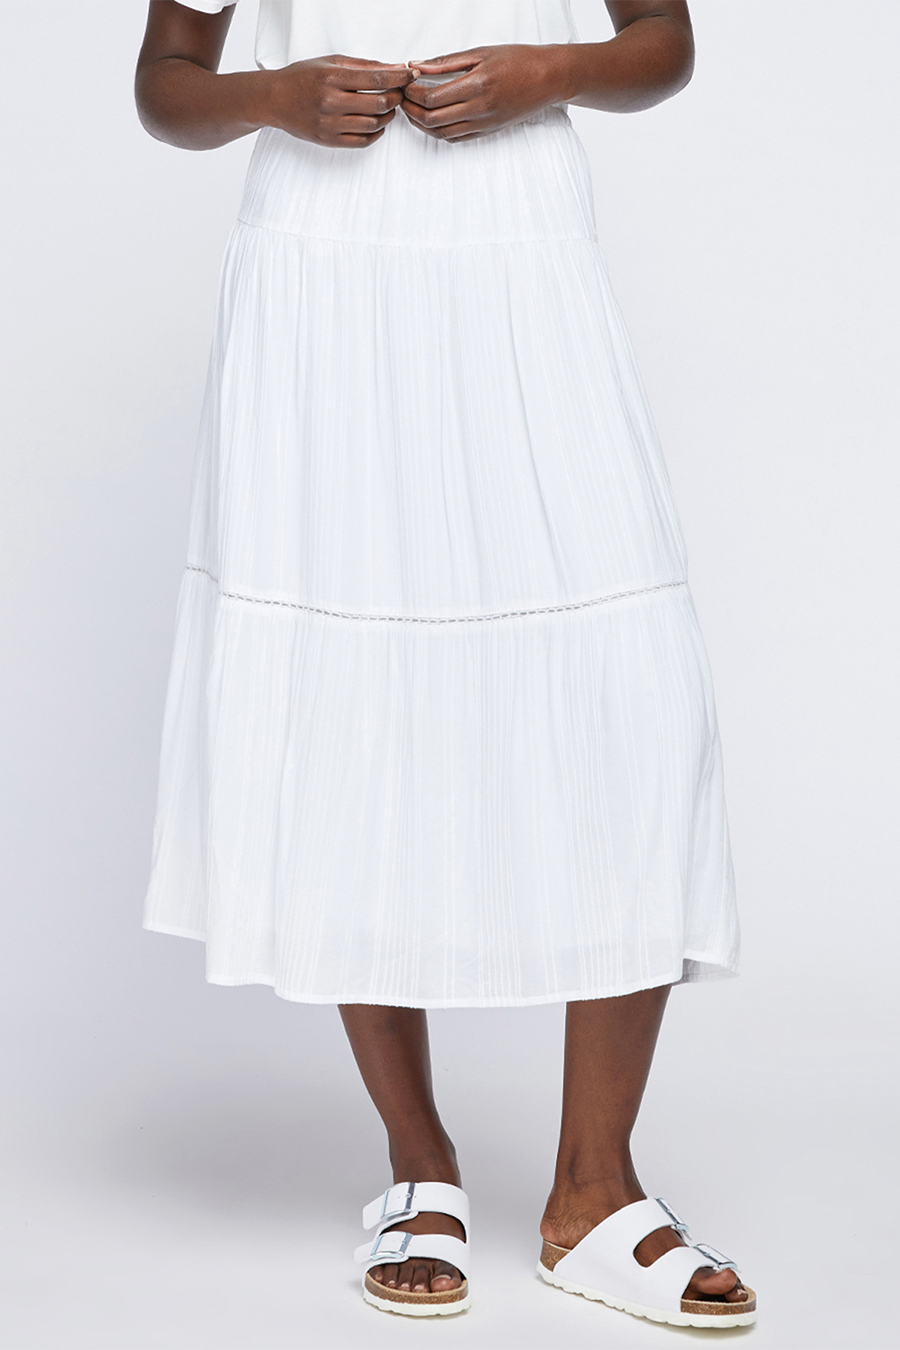 Santorini Stripe Skirt | Ivory - Main Image Number 1 of 2